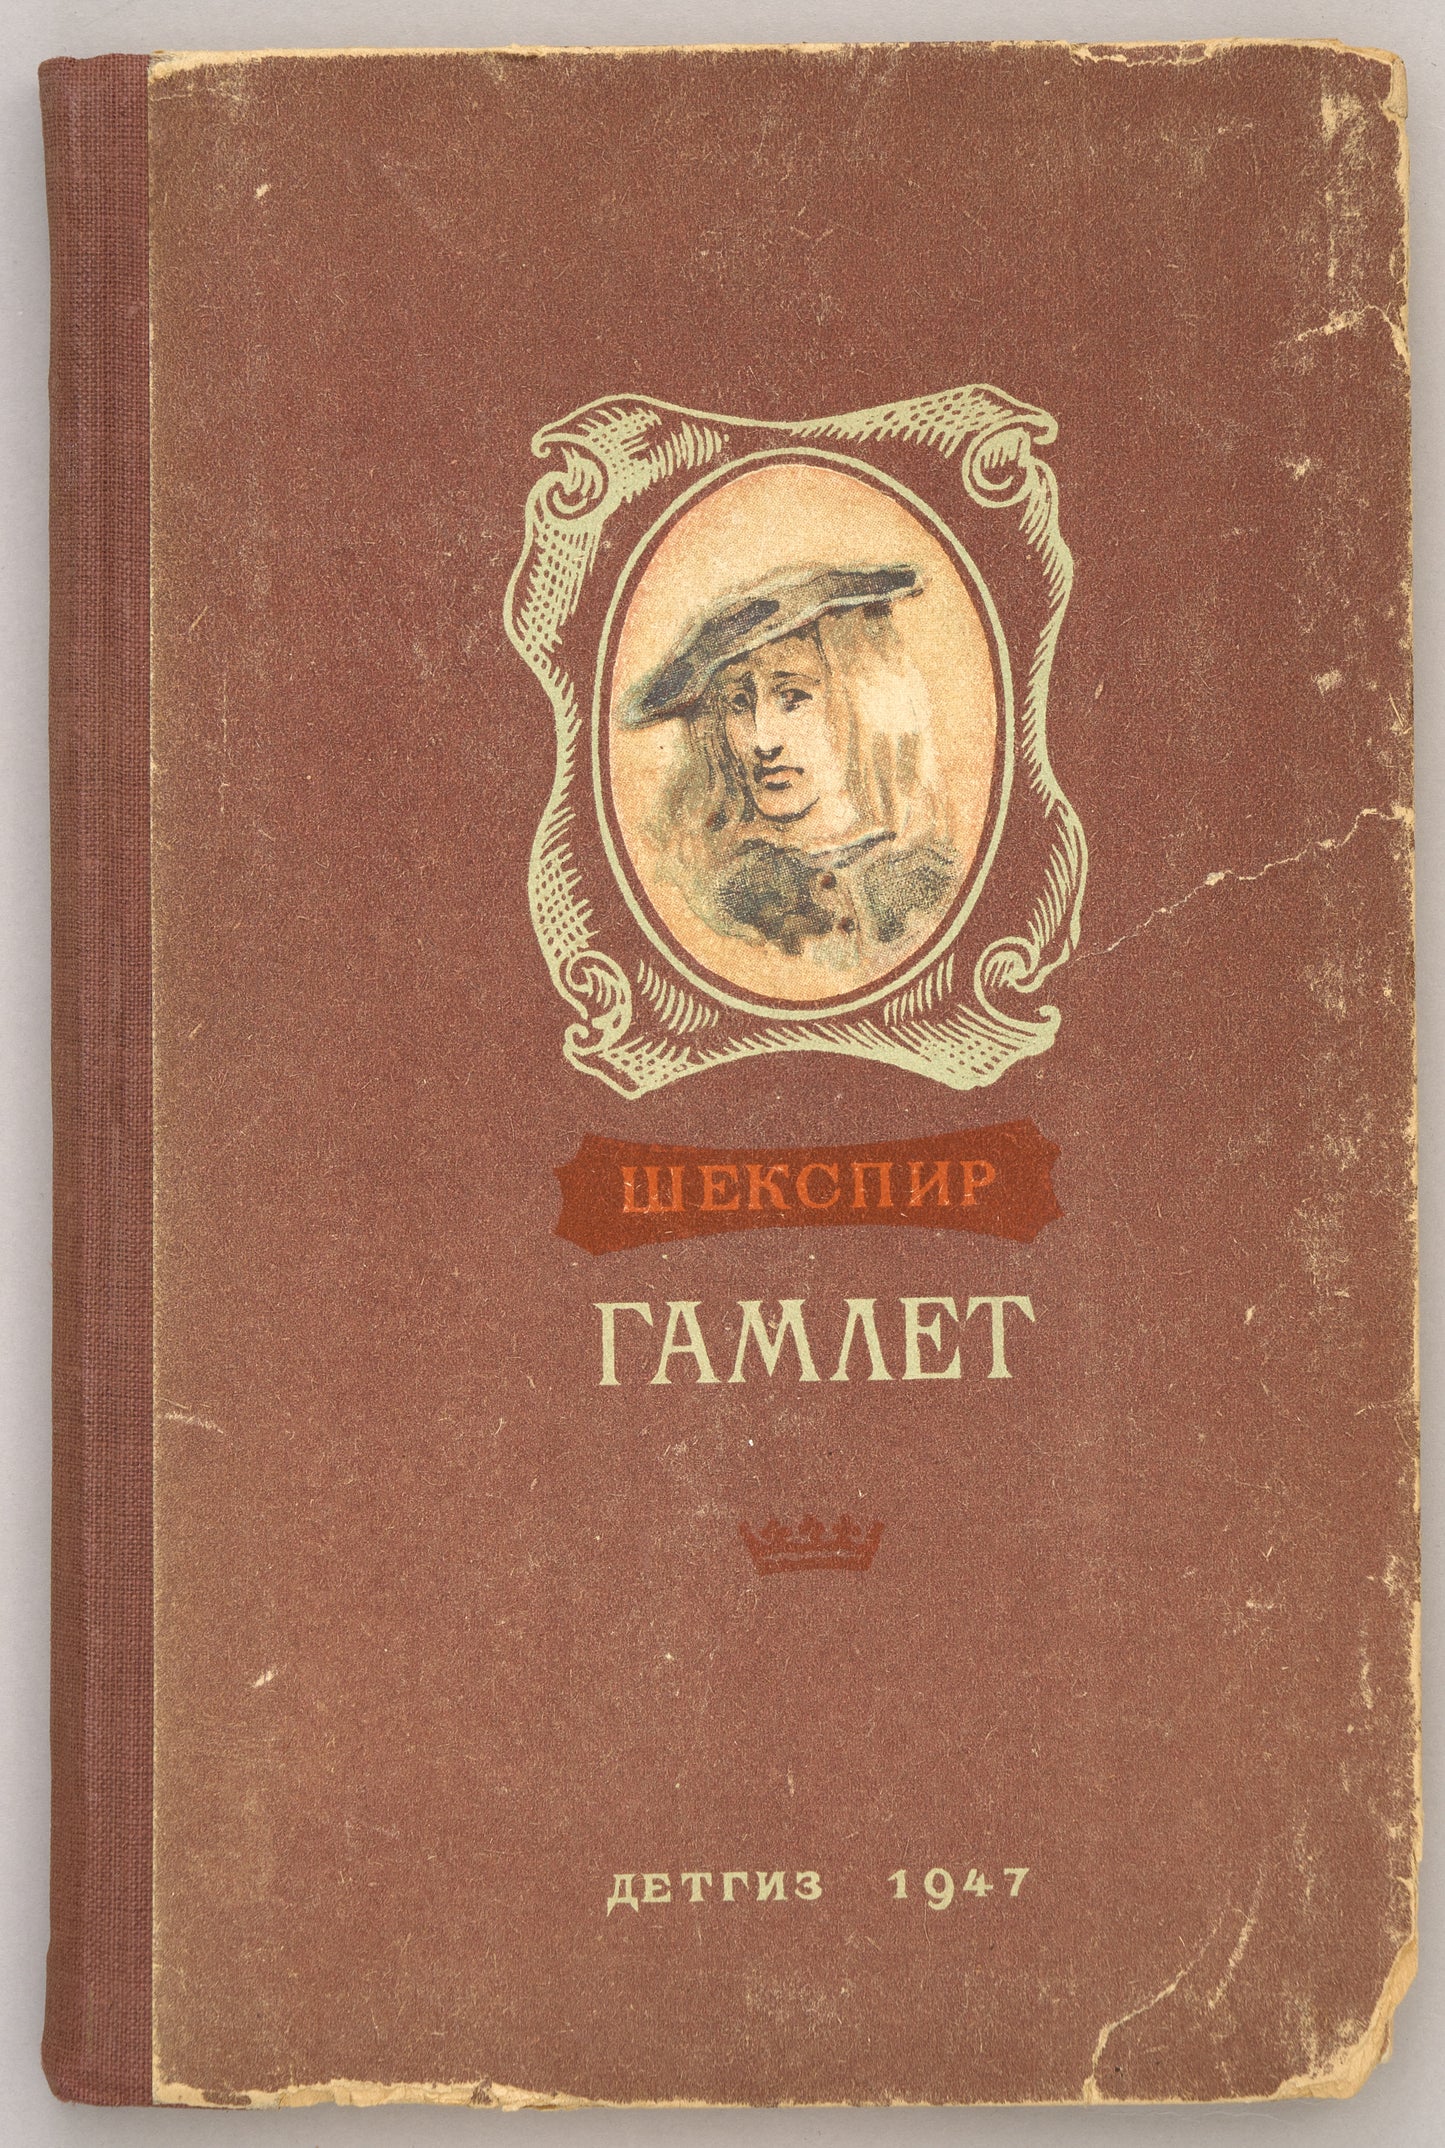 The Tragedy of Hamlet. Signed by Boris Pasternak, the translator.